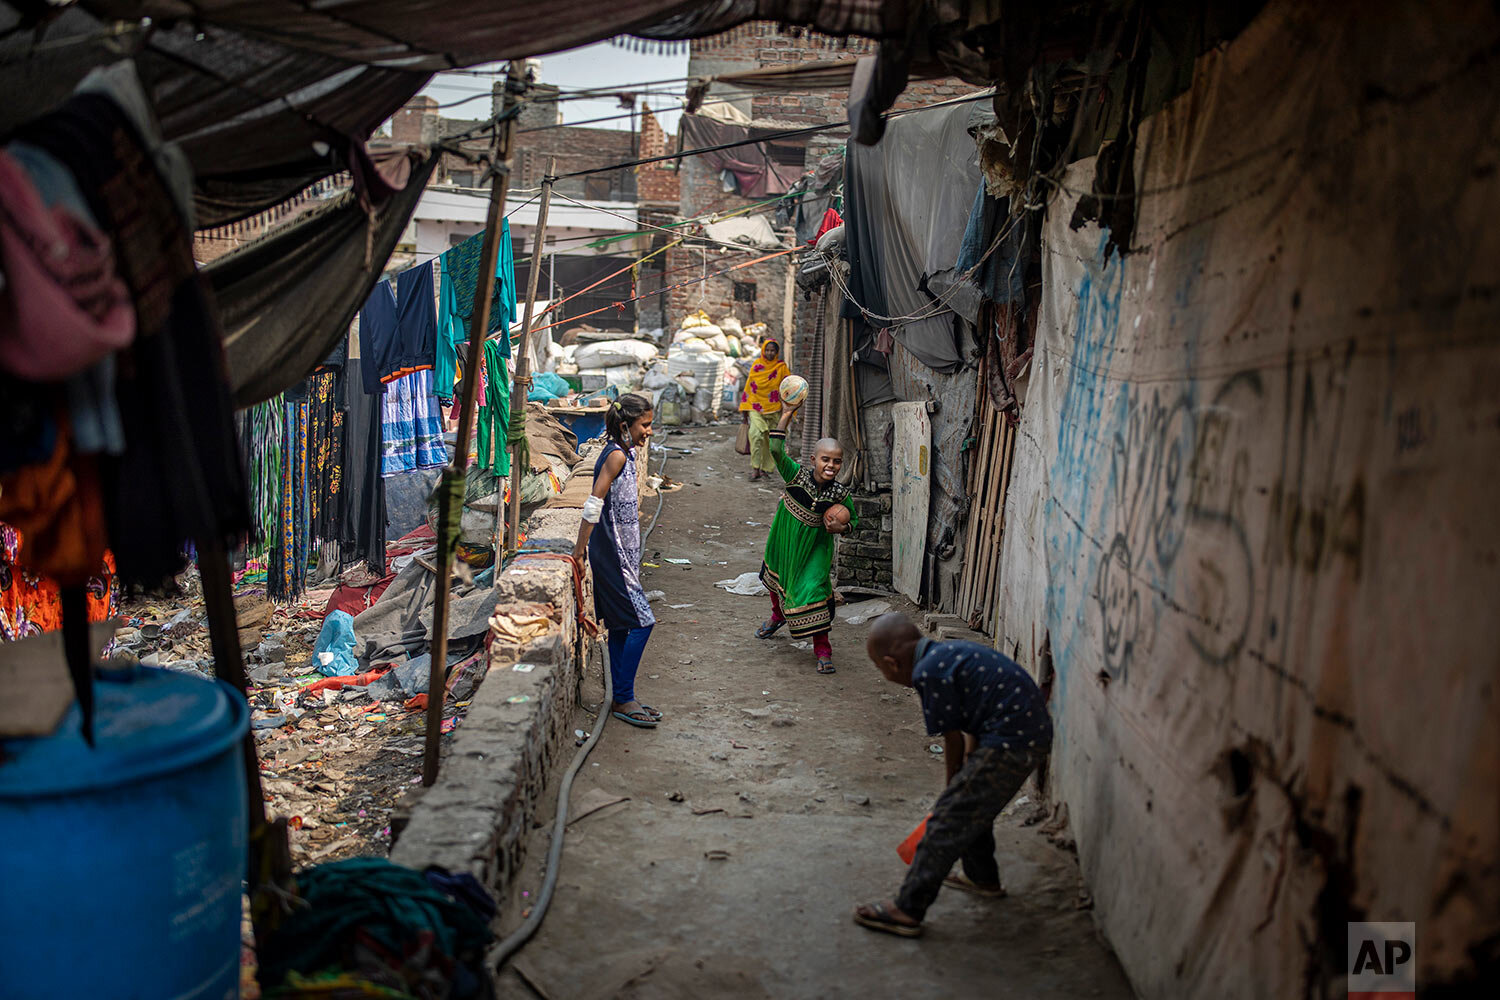  Children of migrant waste pickers play in a slum in New Delhi, India, Wednesday, March 10, 2021. (AP Photo/Altaf Qadri) 